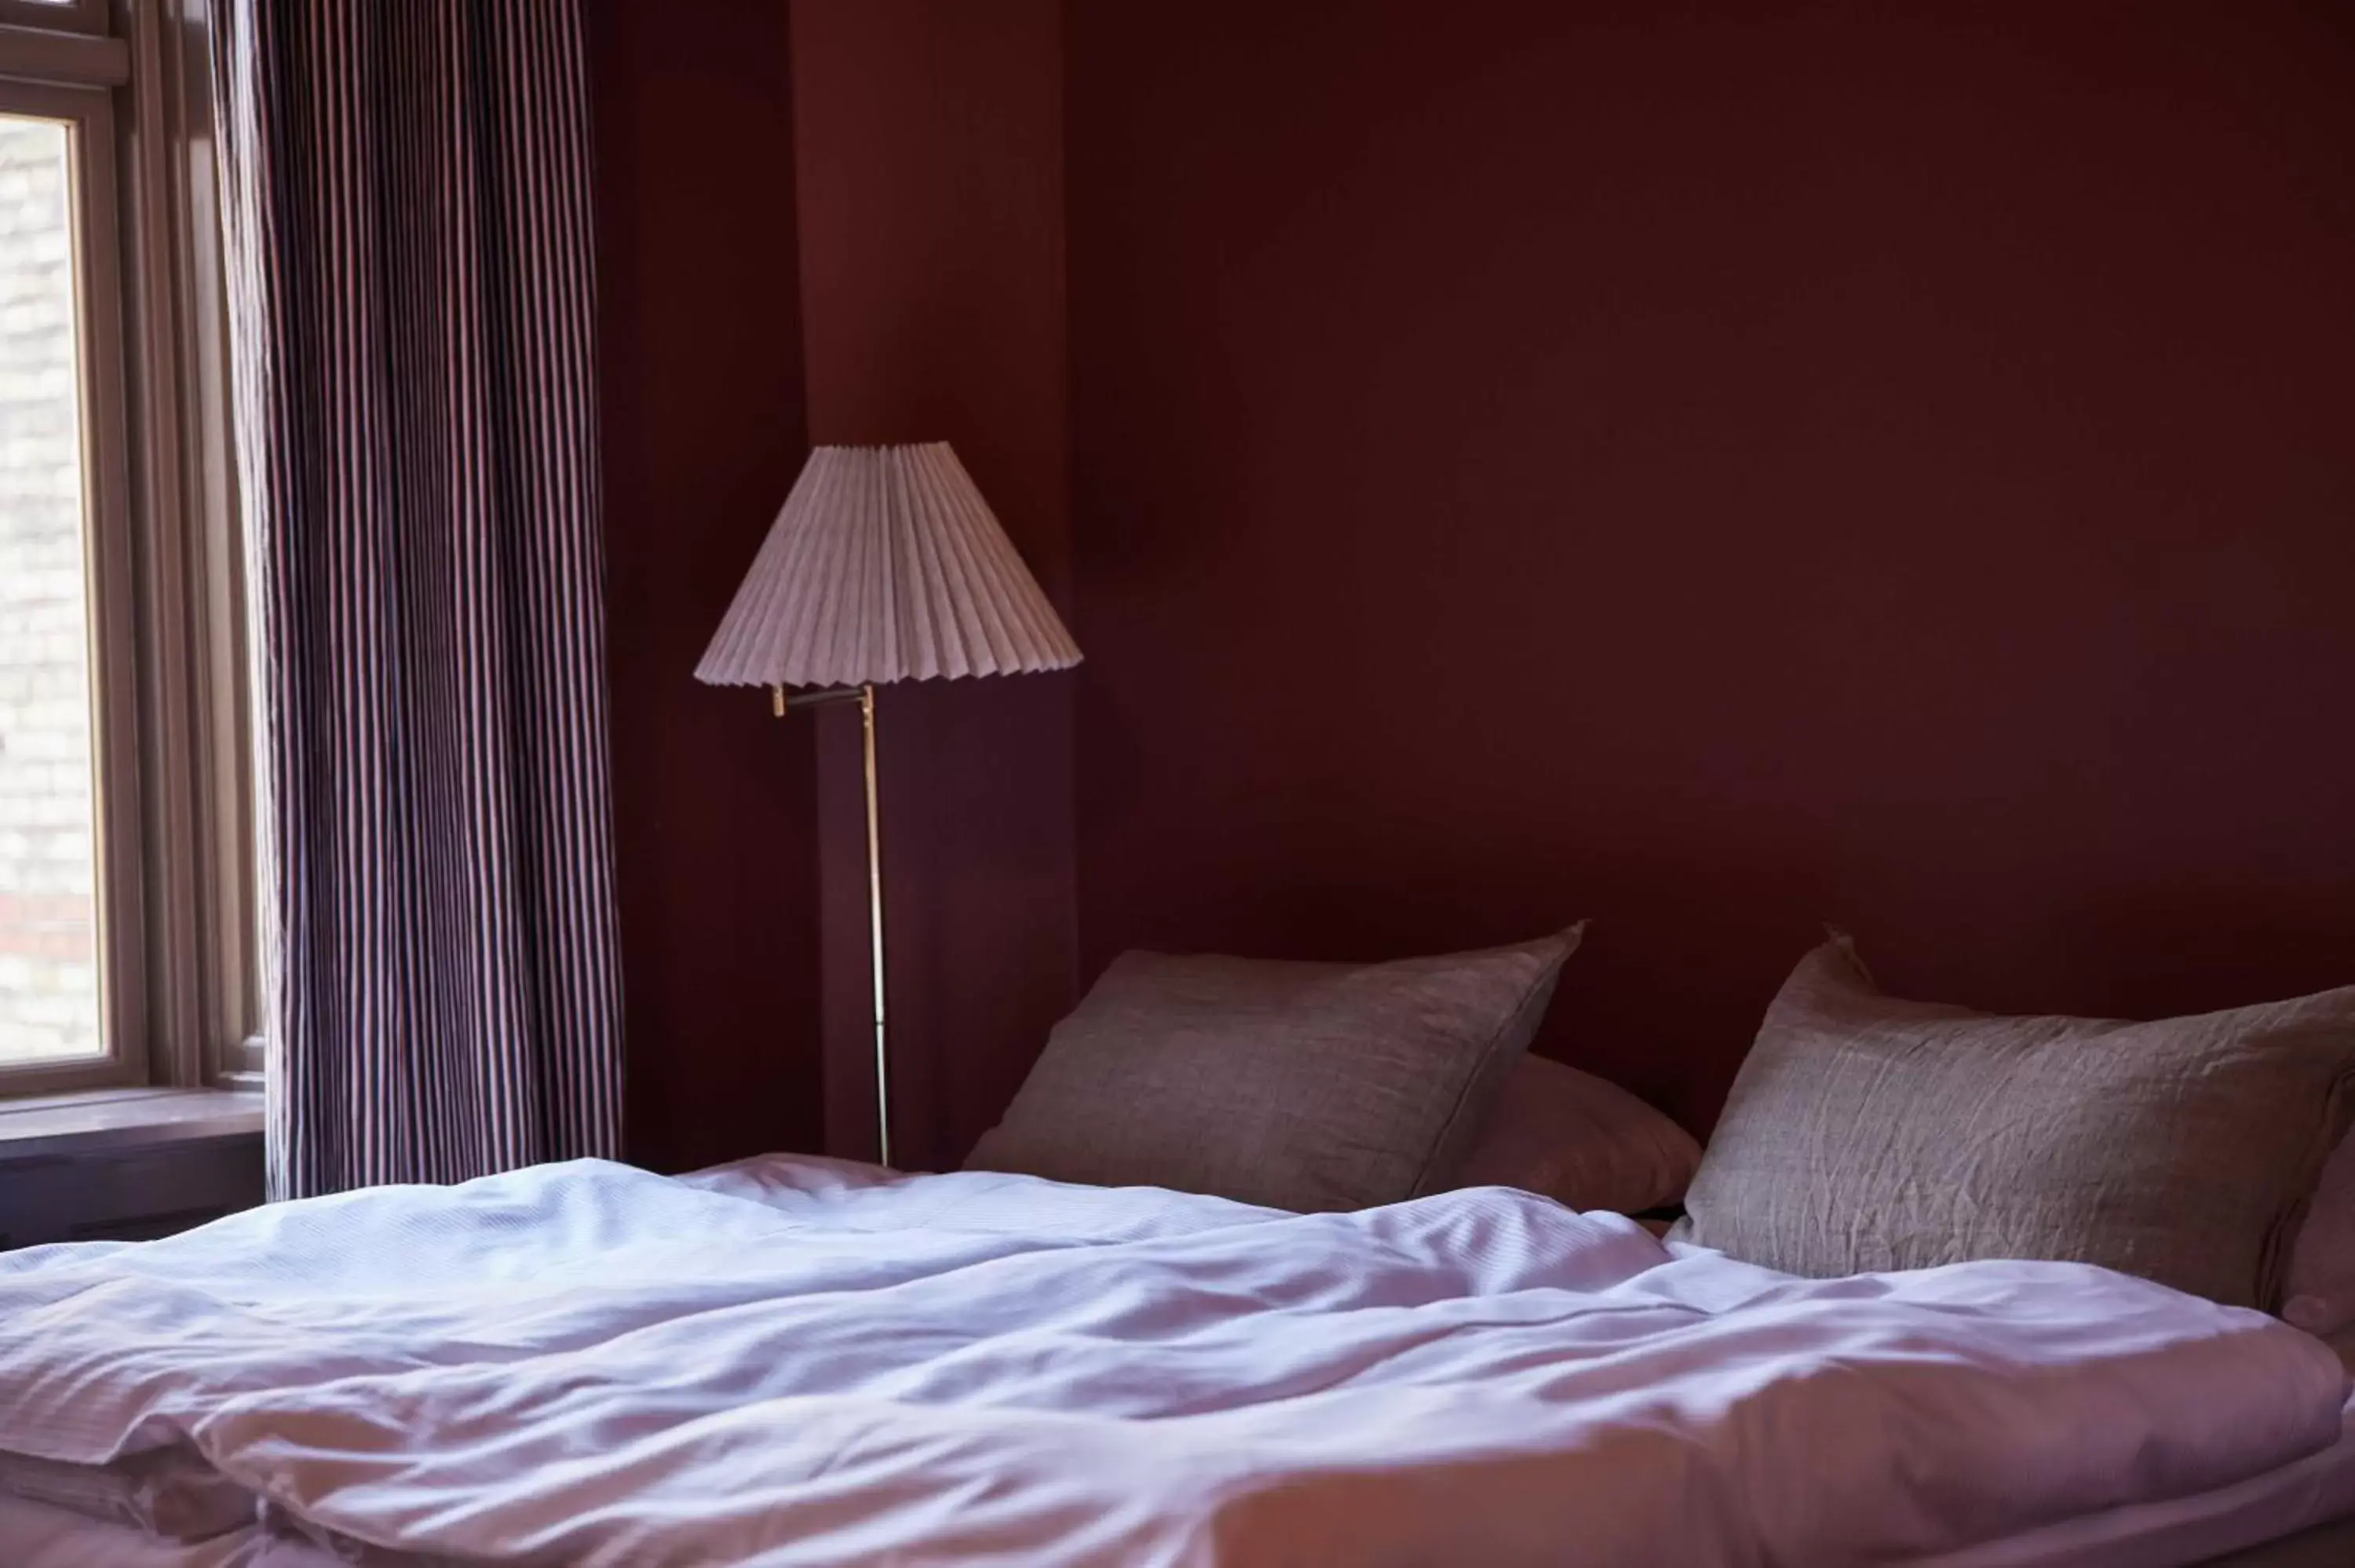 Bed in Rye115 Hotel